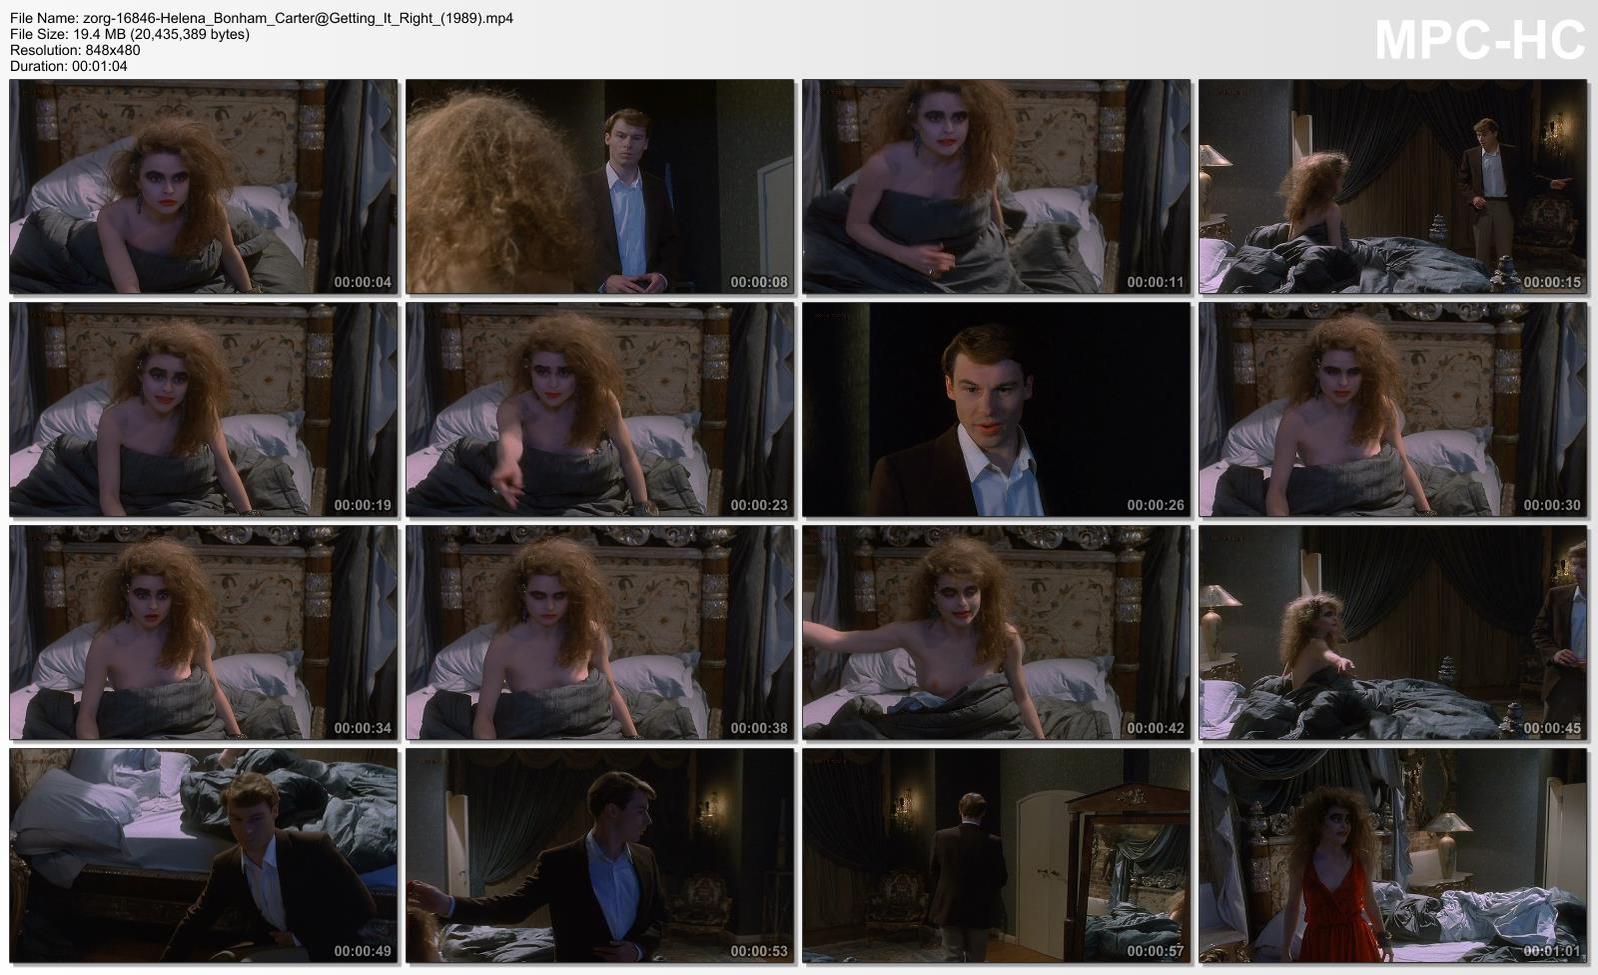 Helena Bonham Carter nude - Getting It Right (1989)